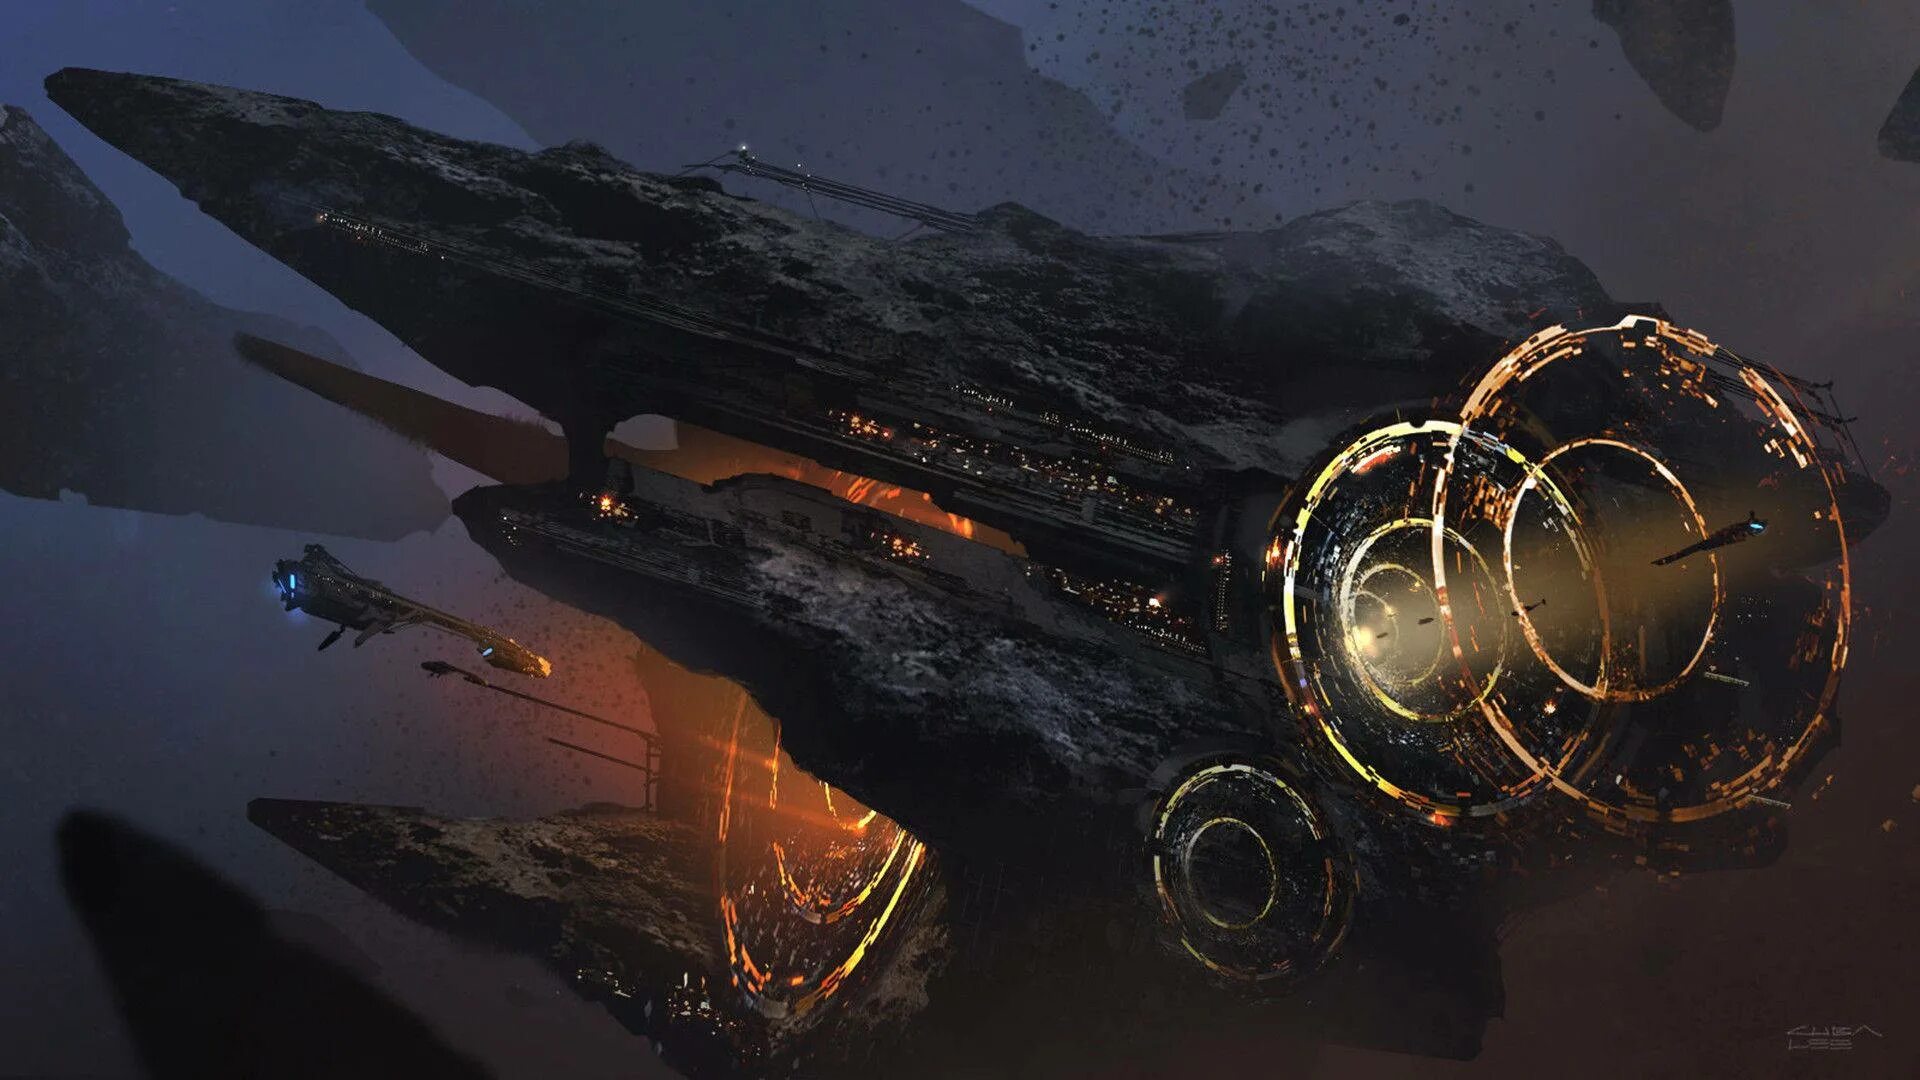 Best sci fi. Инопланетный корабль Sci-Fi арт. Sci Fi космический корабль Левиафан. Космический корабль Левиафан концепт арт. Sci Fi корабль Левиафан.